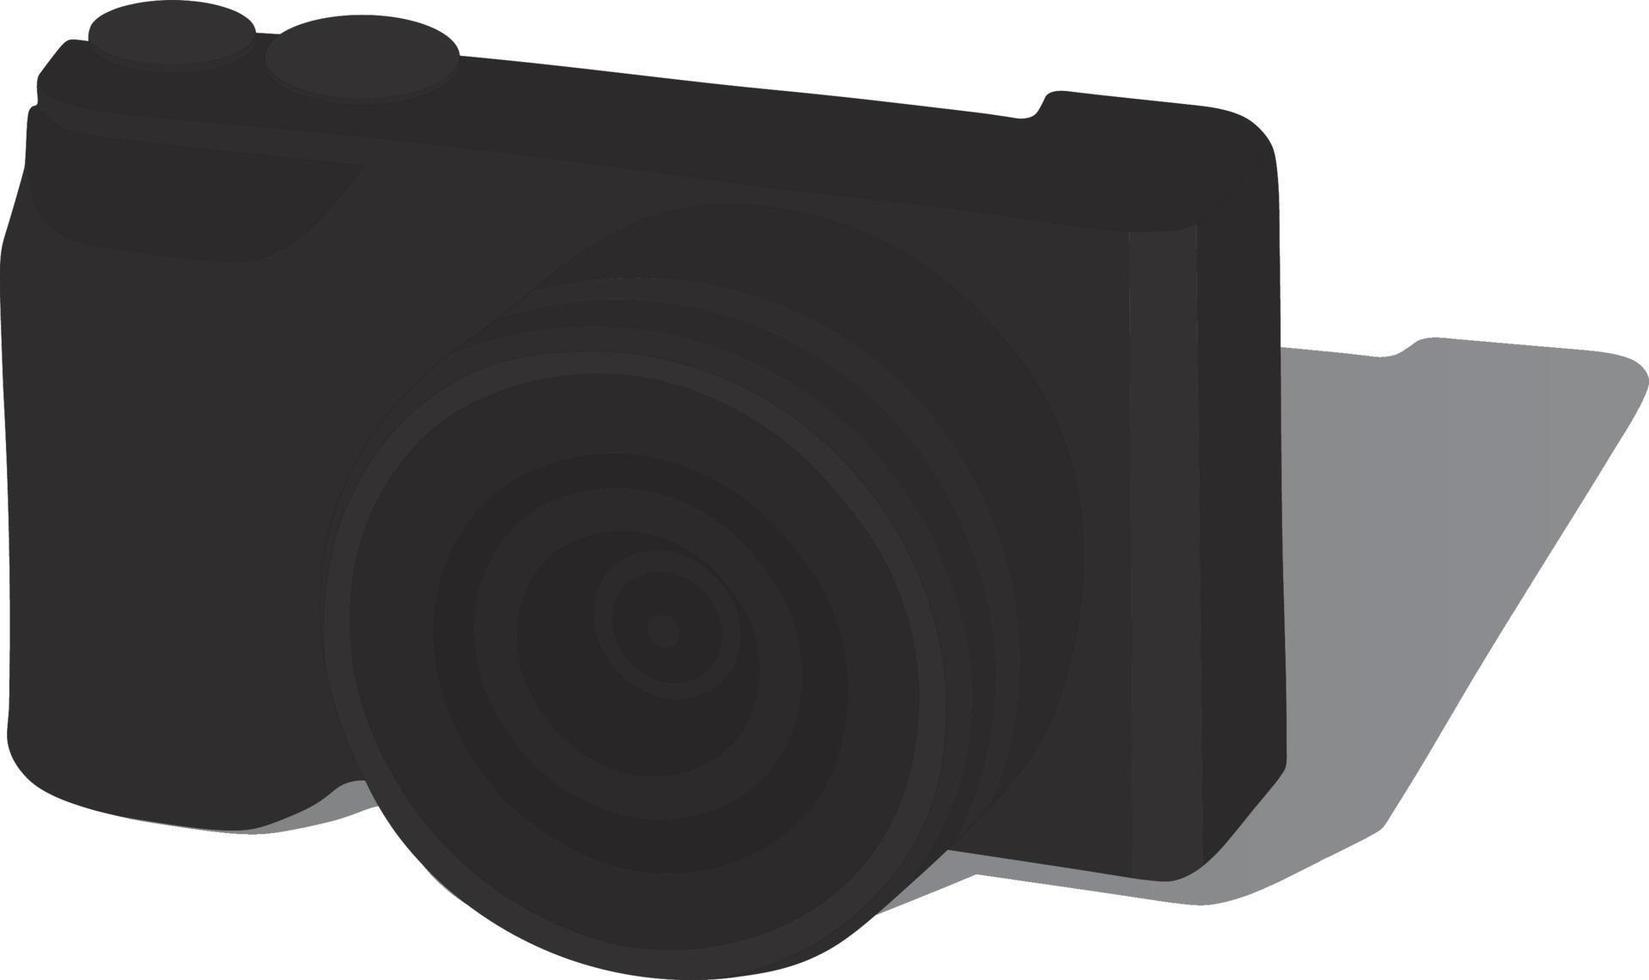 Black colour digital photo camera vector illustration